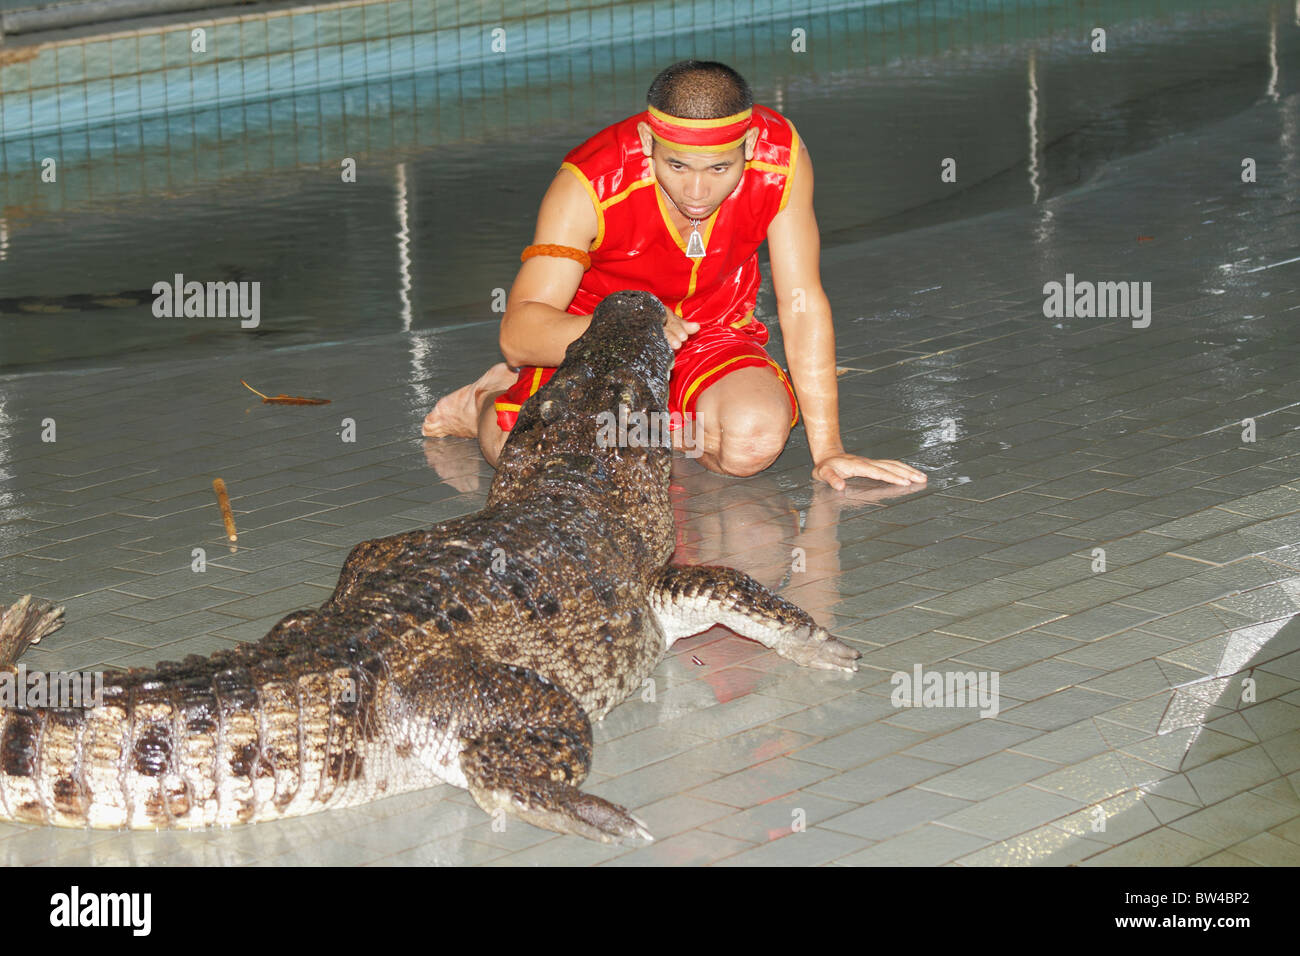 Krokodil (Alligator) Mann in seiner Show mit Krokodilen, Bangkok, Thailand, Oktober 2010 Stockfoto